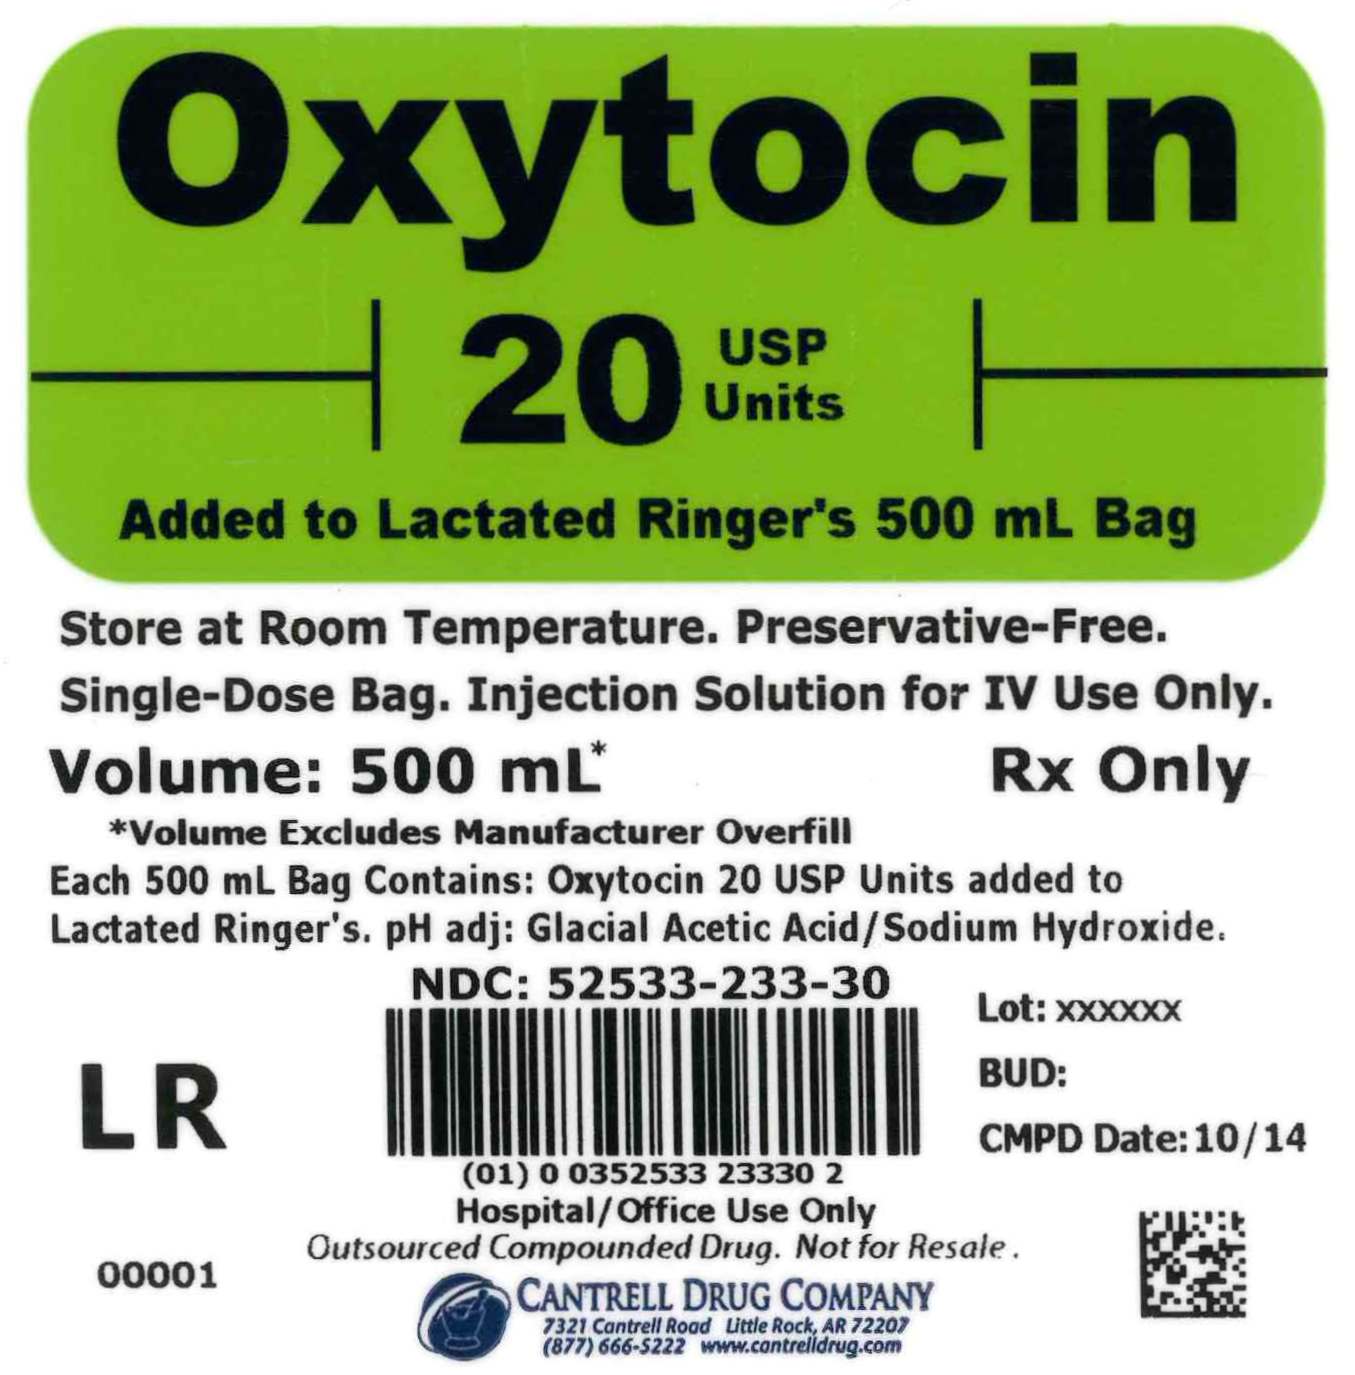 Oxytocin 20 USP Units Added to Lactated Ringer's 500 mL Bag